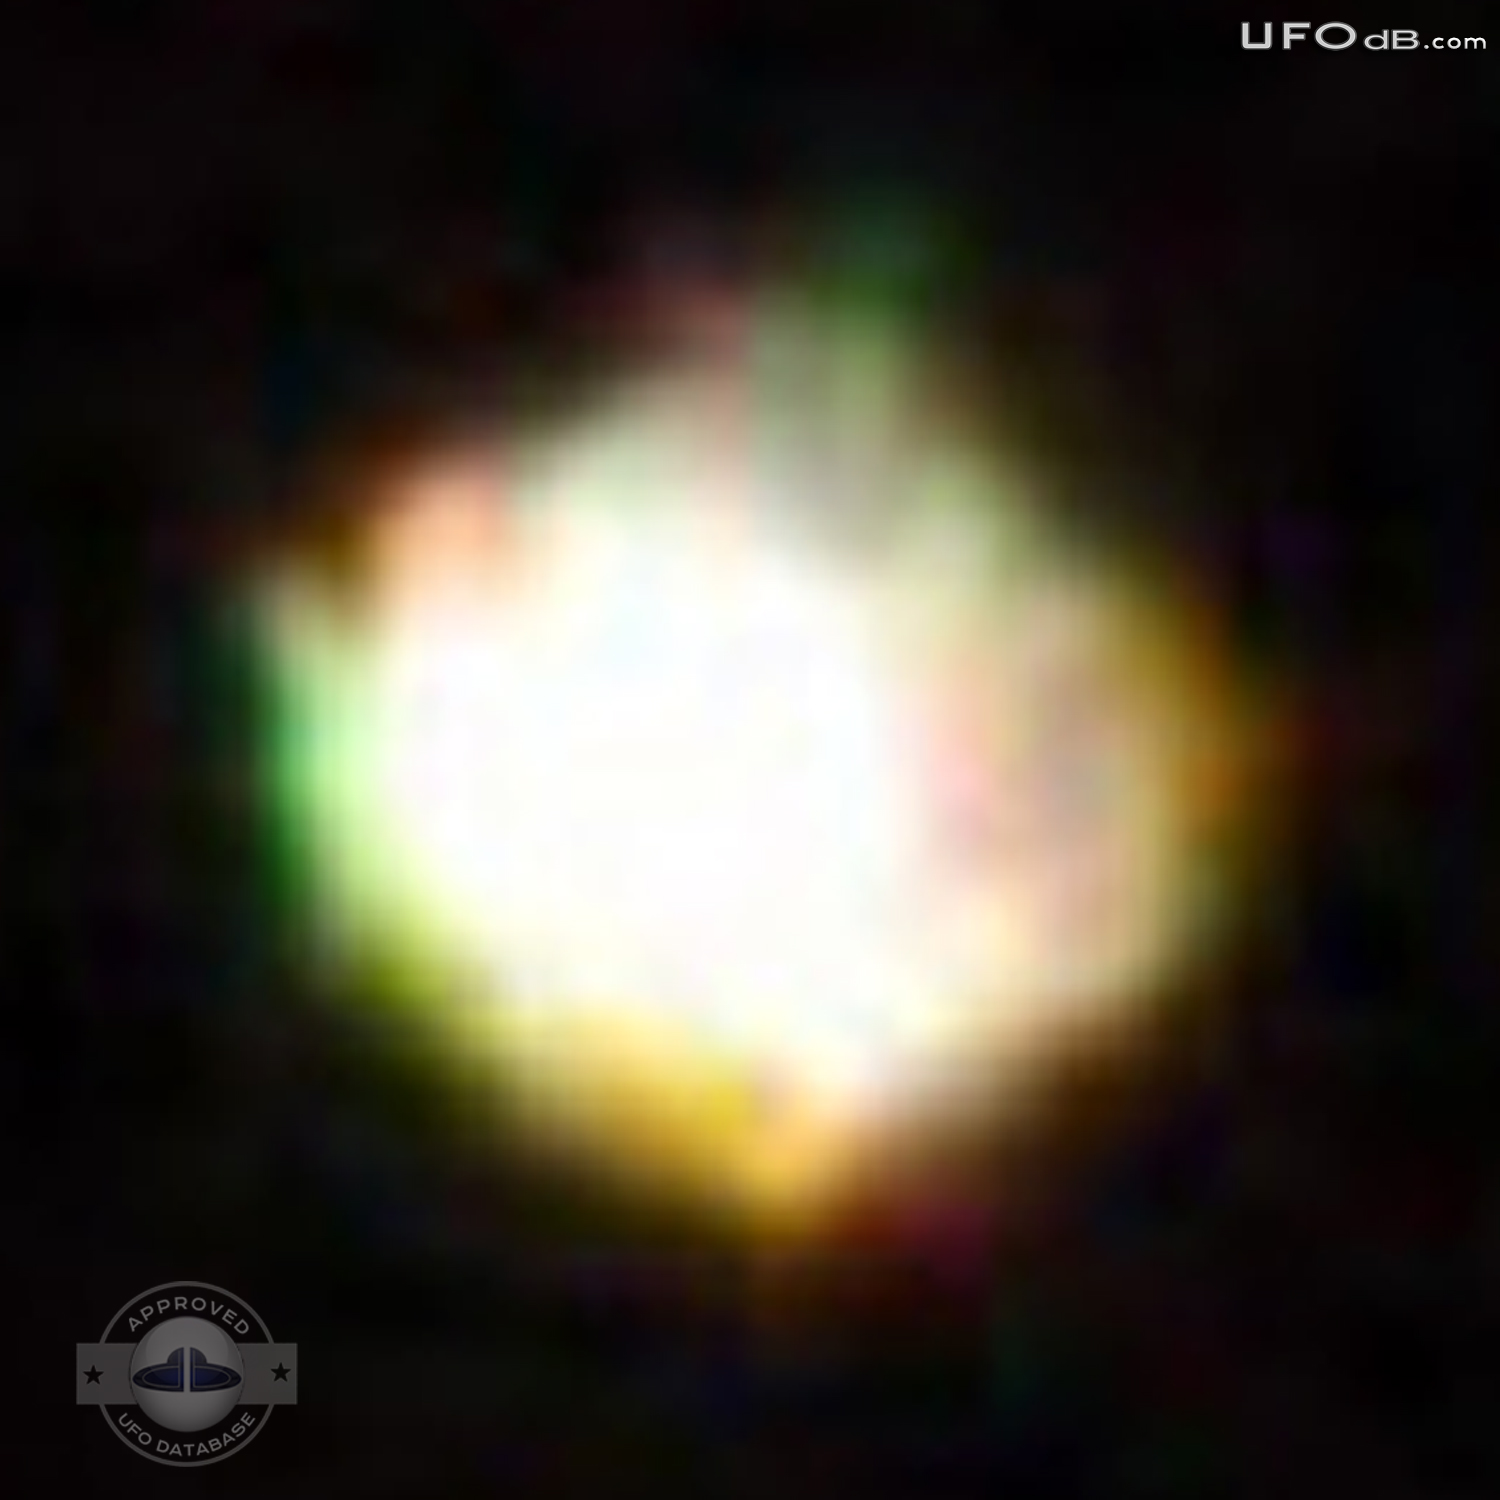 Icosahedron UFO with colored lights | Minnesota USA | February 21 2011 UFO Picture #331-5